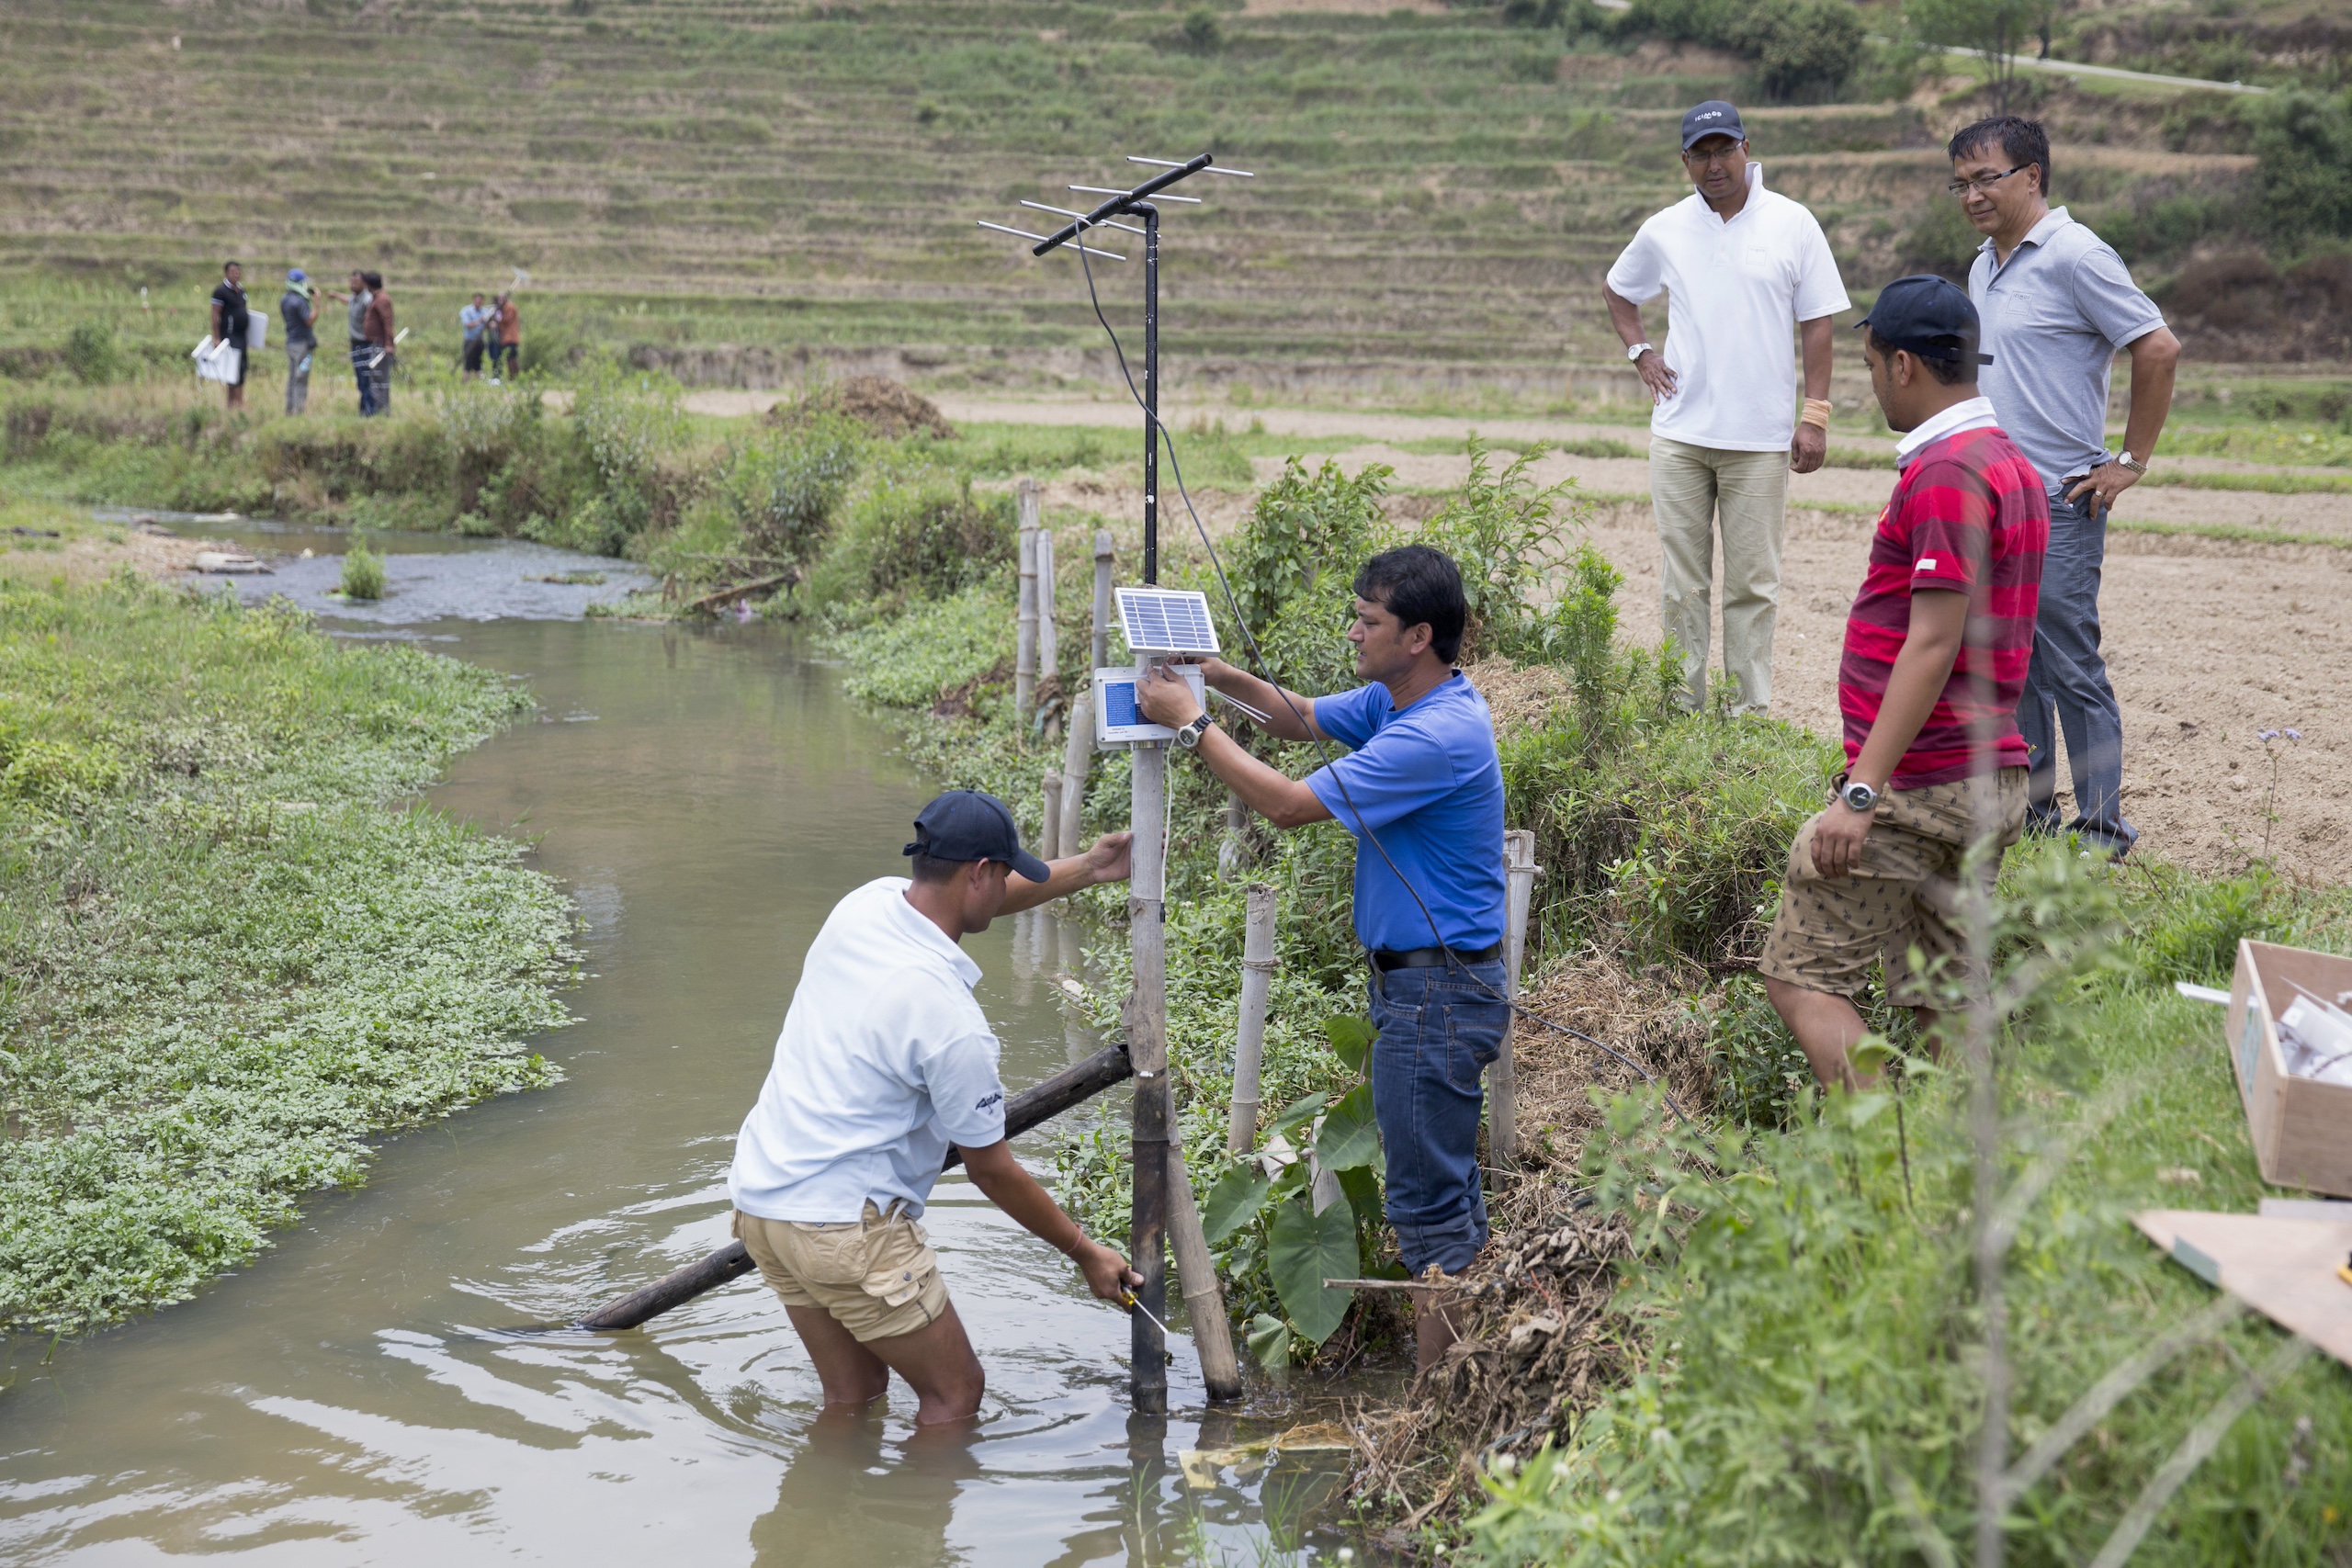 <p>In June 2015, staff from The International Centre for Integrated Mountain Development (ICIMOD) deliver training for a &#8216;community-based&#8217; flood early warning system in Lalitpur, Nepal (Image: <a href="https://www.flickr.com/people/icimodgallery/">ICIMOD Kathmandu</a> / <a href="https://www.flickr.com/photos/icimodgallery/20142429581/in/photolist-wFVdyD-wEHUvo-2hz7ytZ-woNVqy-woQfF5-wFWHPR-wFrusx-woPvid-2hyMBfH-rKmX1E-2hzg46g-qQDWBW-pUeAno-pUnfVx-2hyLCPW-2hyLCMb-Gx6ukC-2hyHPzS-woQH4W-2hzcgHE-vJz7RP-2hyLCHP-vJyFtV-2hyMB9F-2hyHPao-woWUTe-2hyLCia-2hzf4eo-2hzcgZM-2hyMAq1-2hyLCk9-vJr1Bm-2hzagkj-2hyMAY5-2hzcgS7-2hyMBcw-2hze3oZ-2hyMB4F-2hyHPk3-2hyLCdf-2hyLC66-2hyHNC6-2hyLBYs-2hyLBVB-2hzchb8-2hzg3xH-2hzf4CK-2hzf4Mn-2hyMB7r-2hzchgo">Flickr</a>, <a href="https://creativecommons.org/licenses/by-nc/2.0/">CC BY-NC</a>)</p>